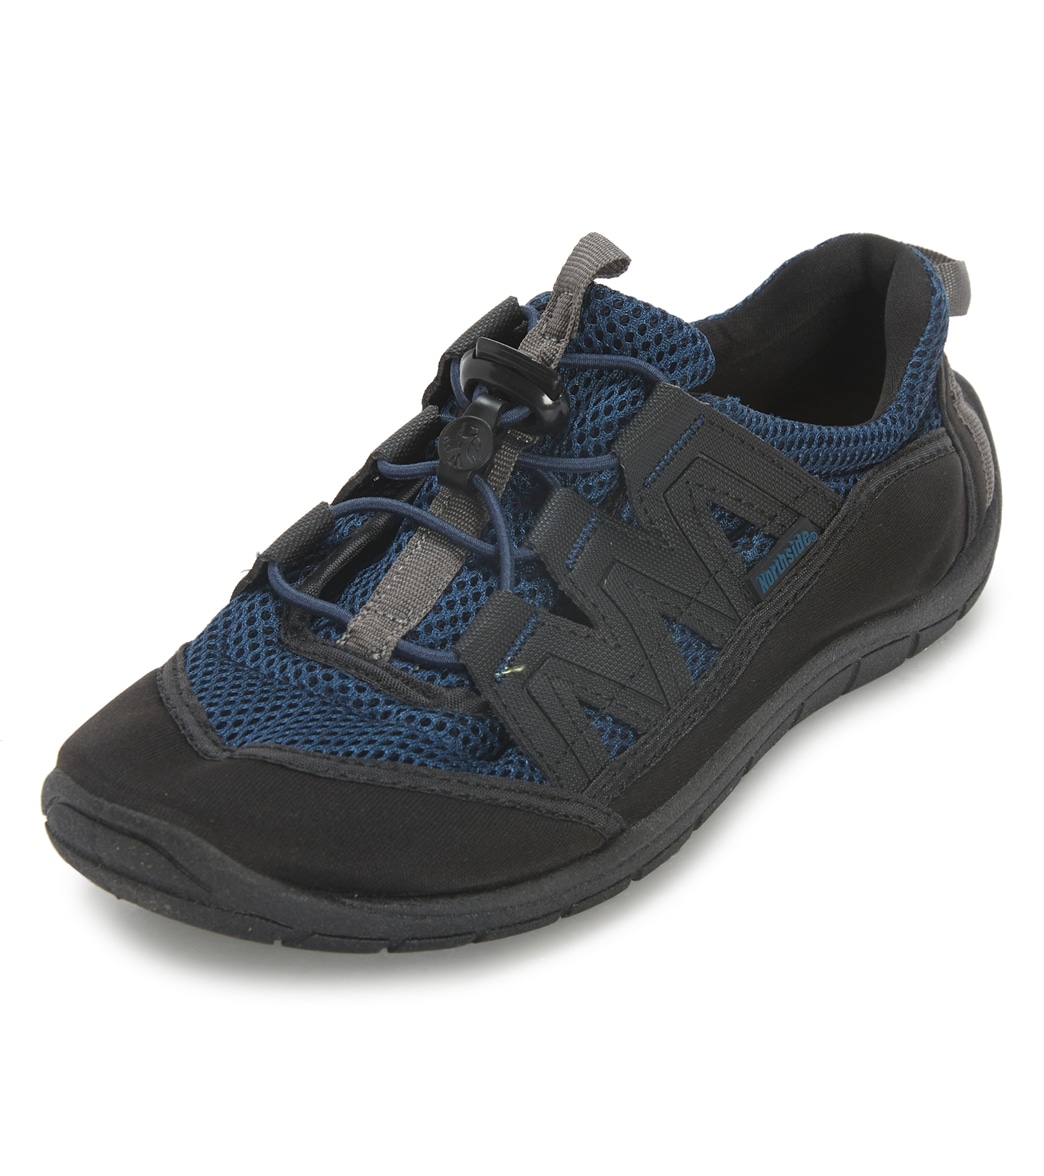 Northside Men's Brille Ii Water Shoes - Black/Navy 070 - Swimoutlet.com